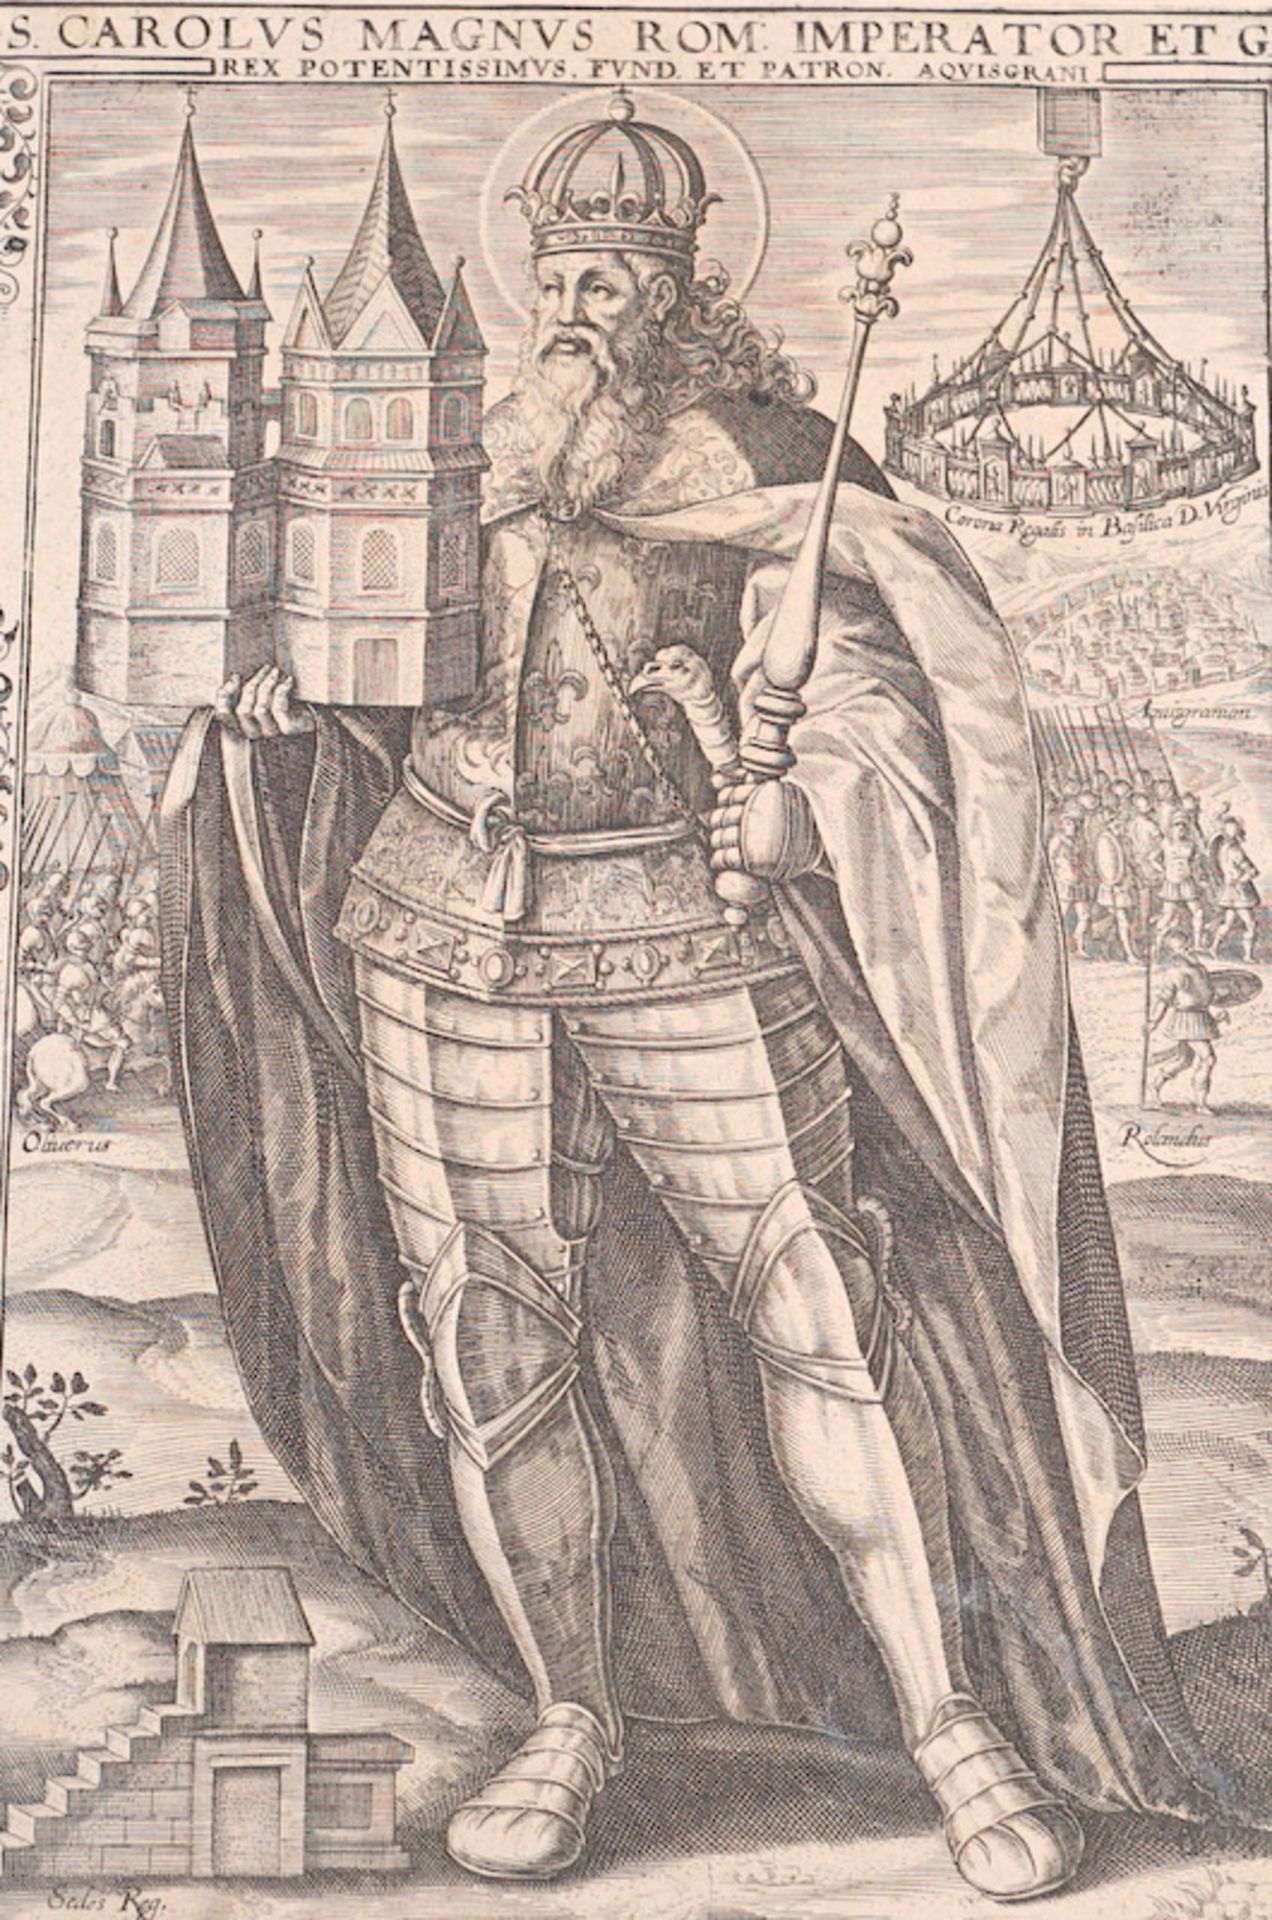 Alzenbach, Gerhard: Karl Der Große: Carolus Magnus Rom Imperator - Cölln 1615 - Image 2 of 2